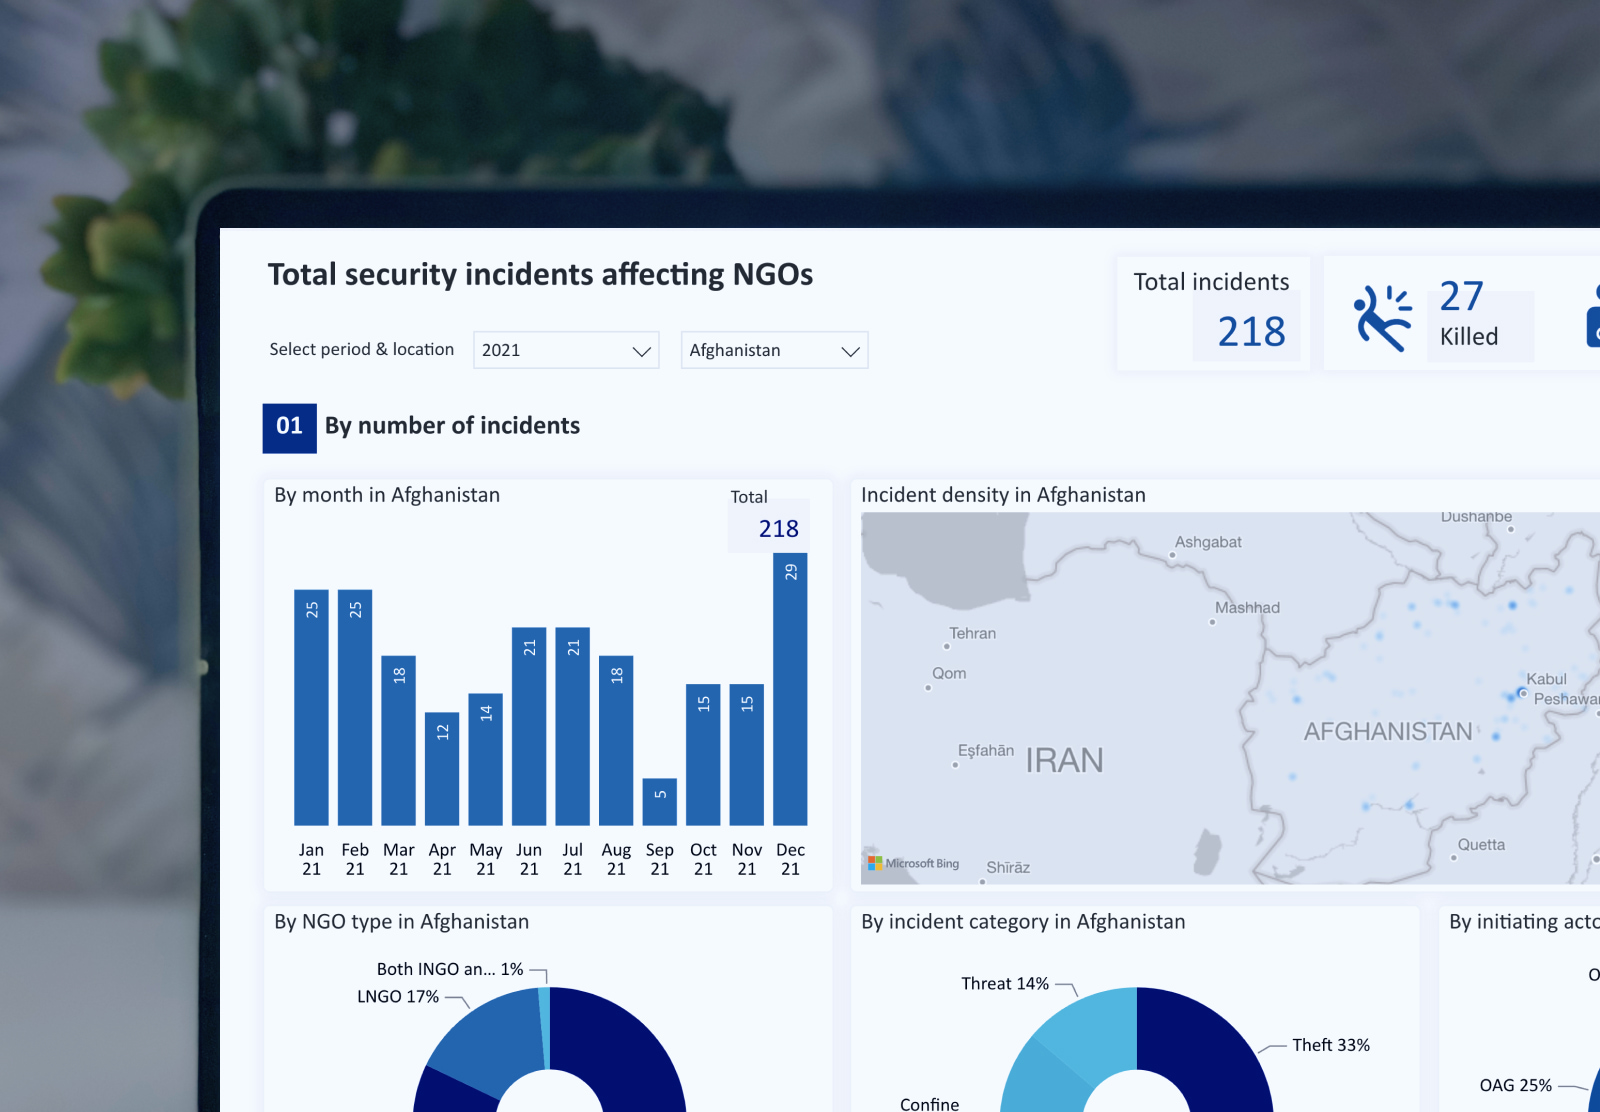 INSO's NGO data dashboard